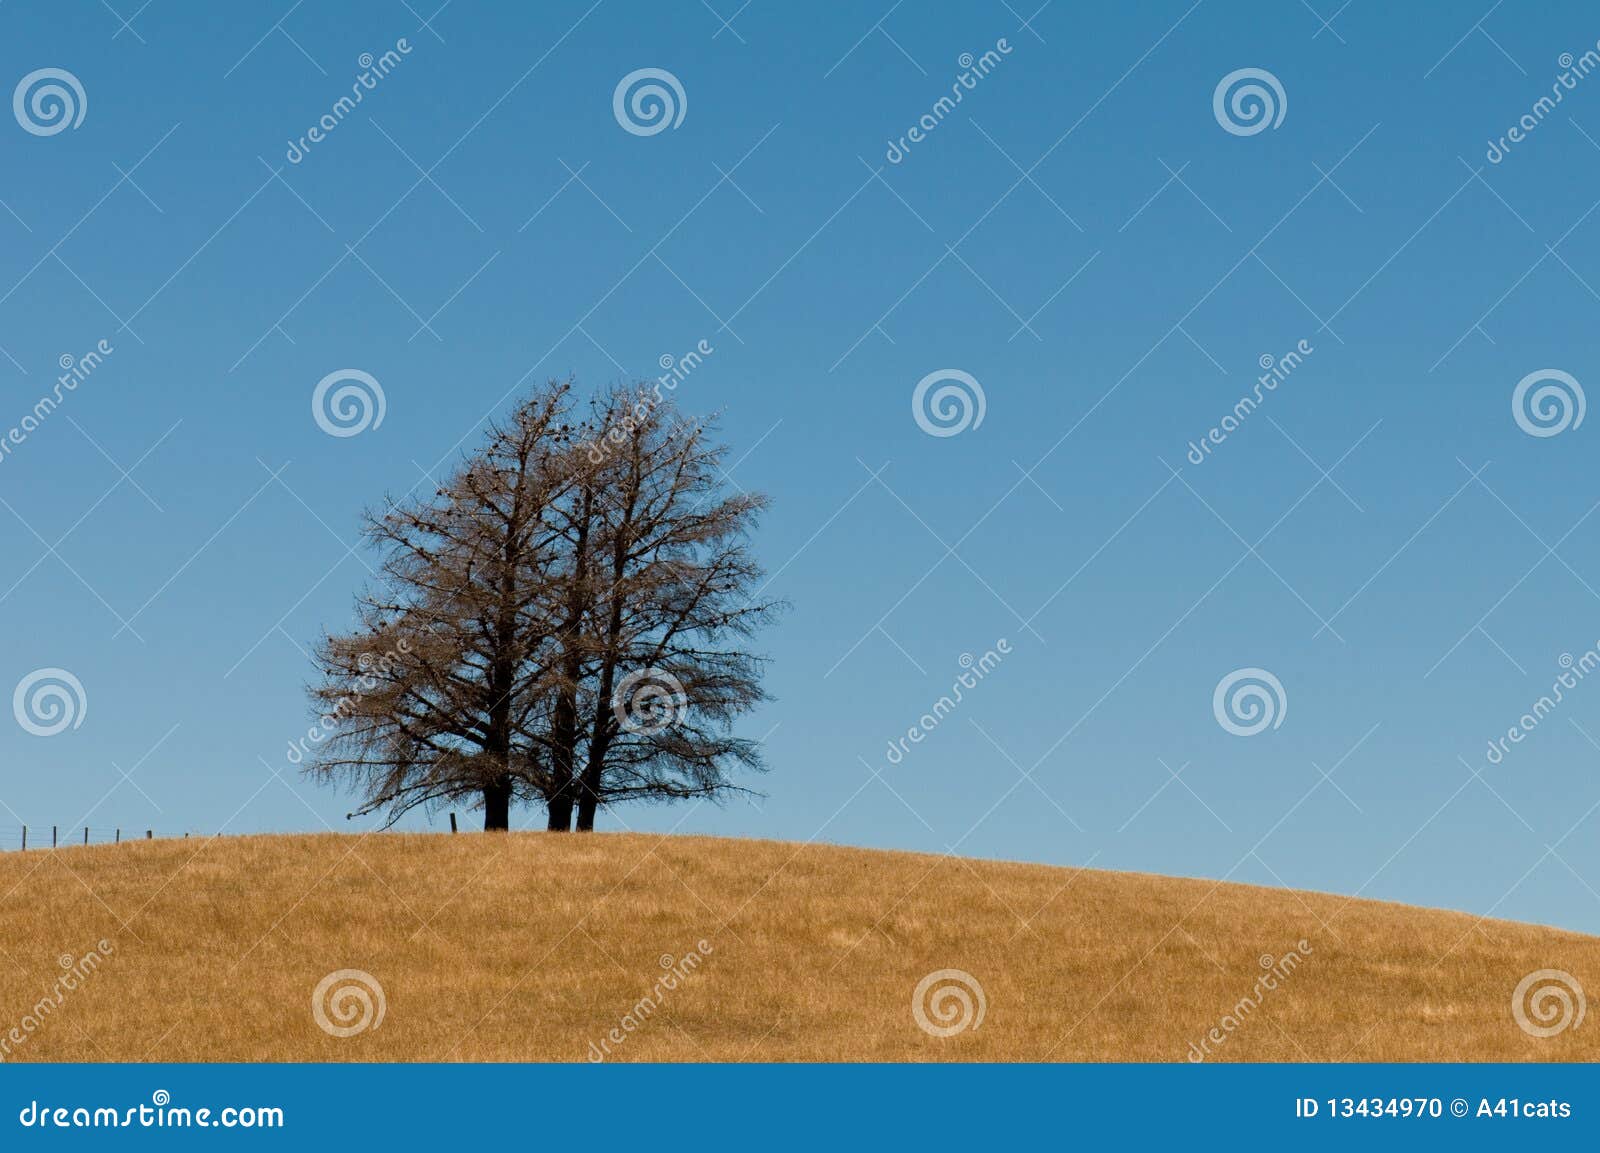 tree formation on a hill of veldt, open grassland